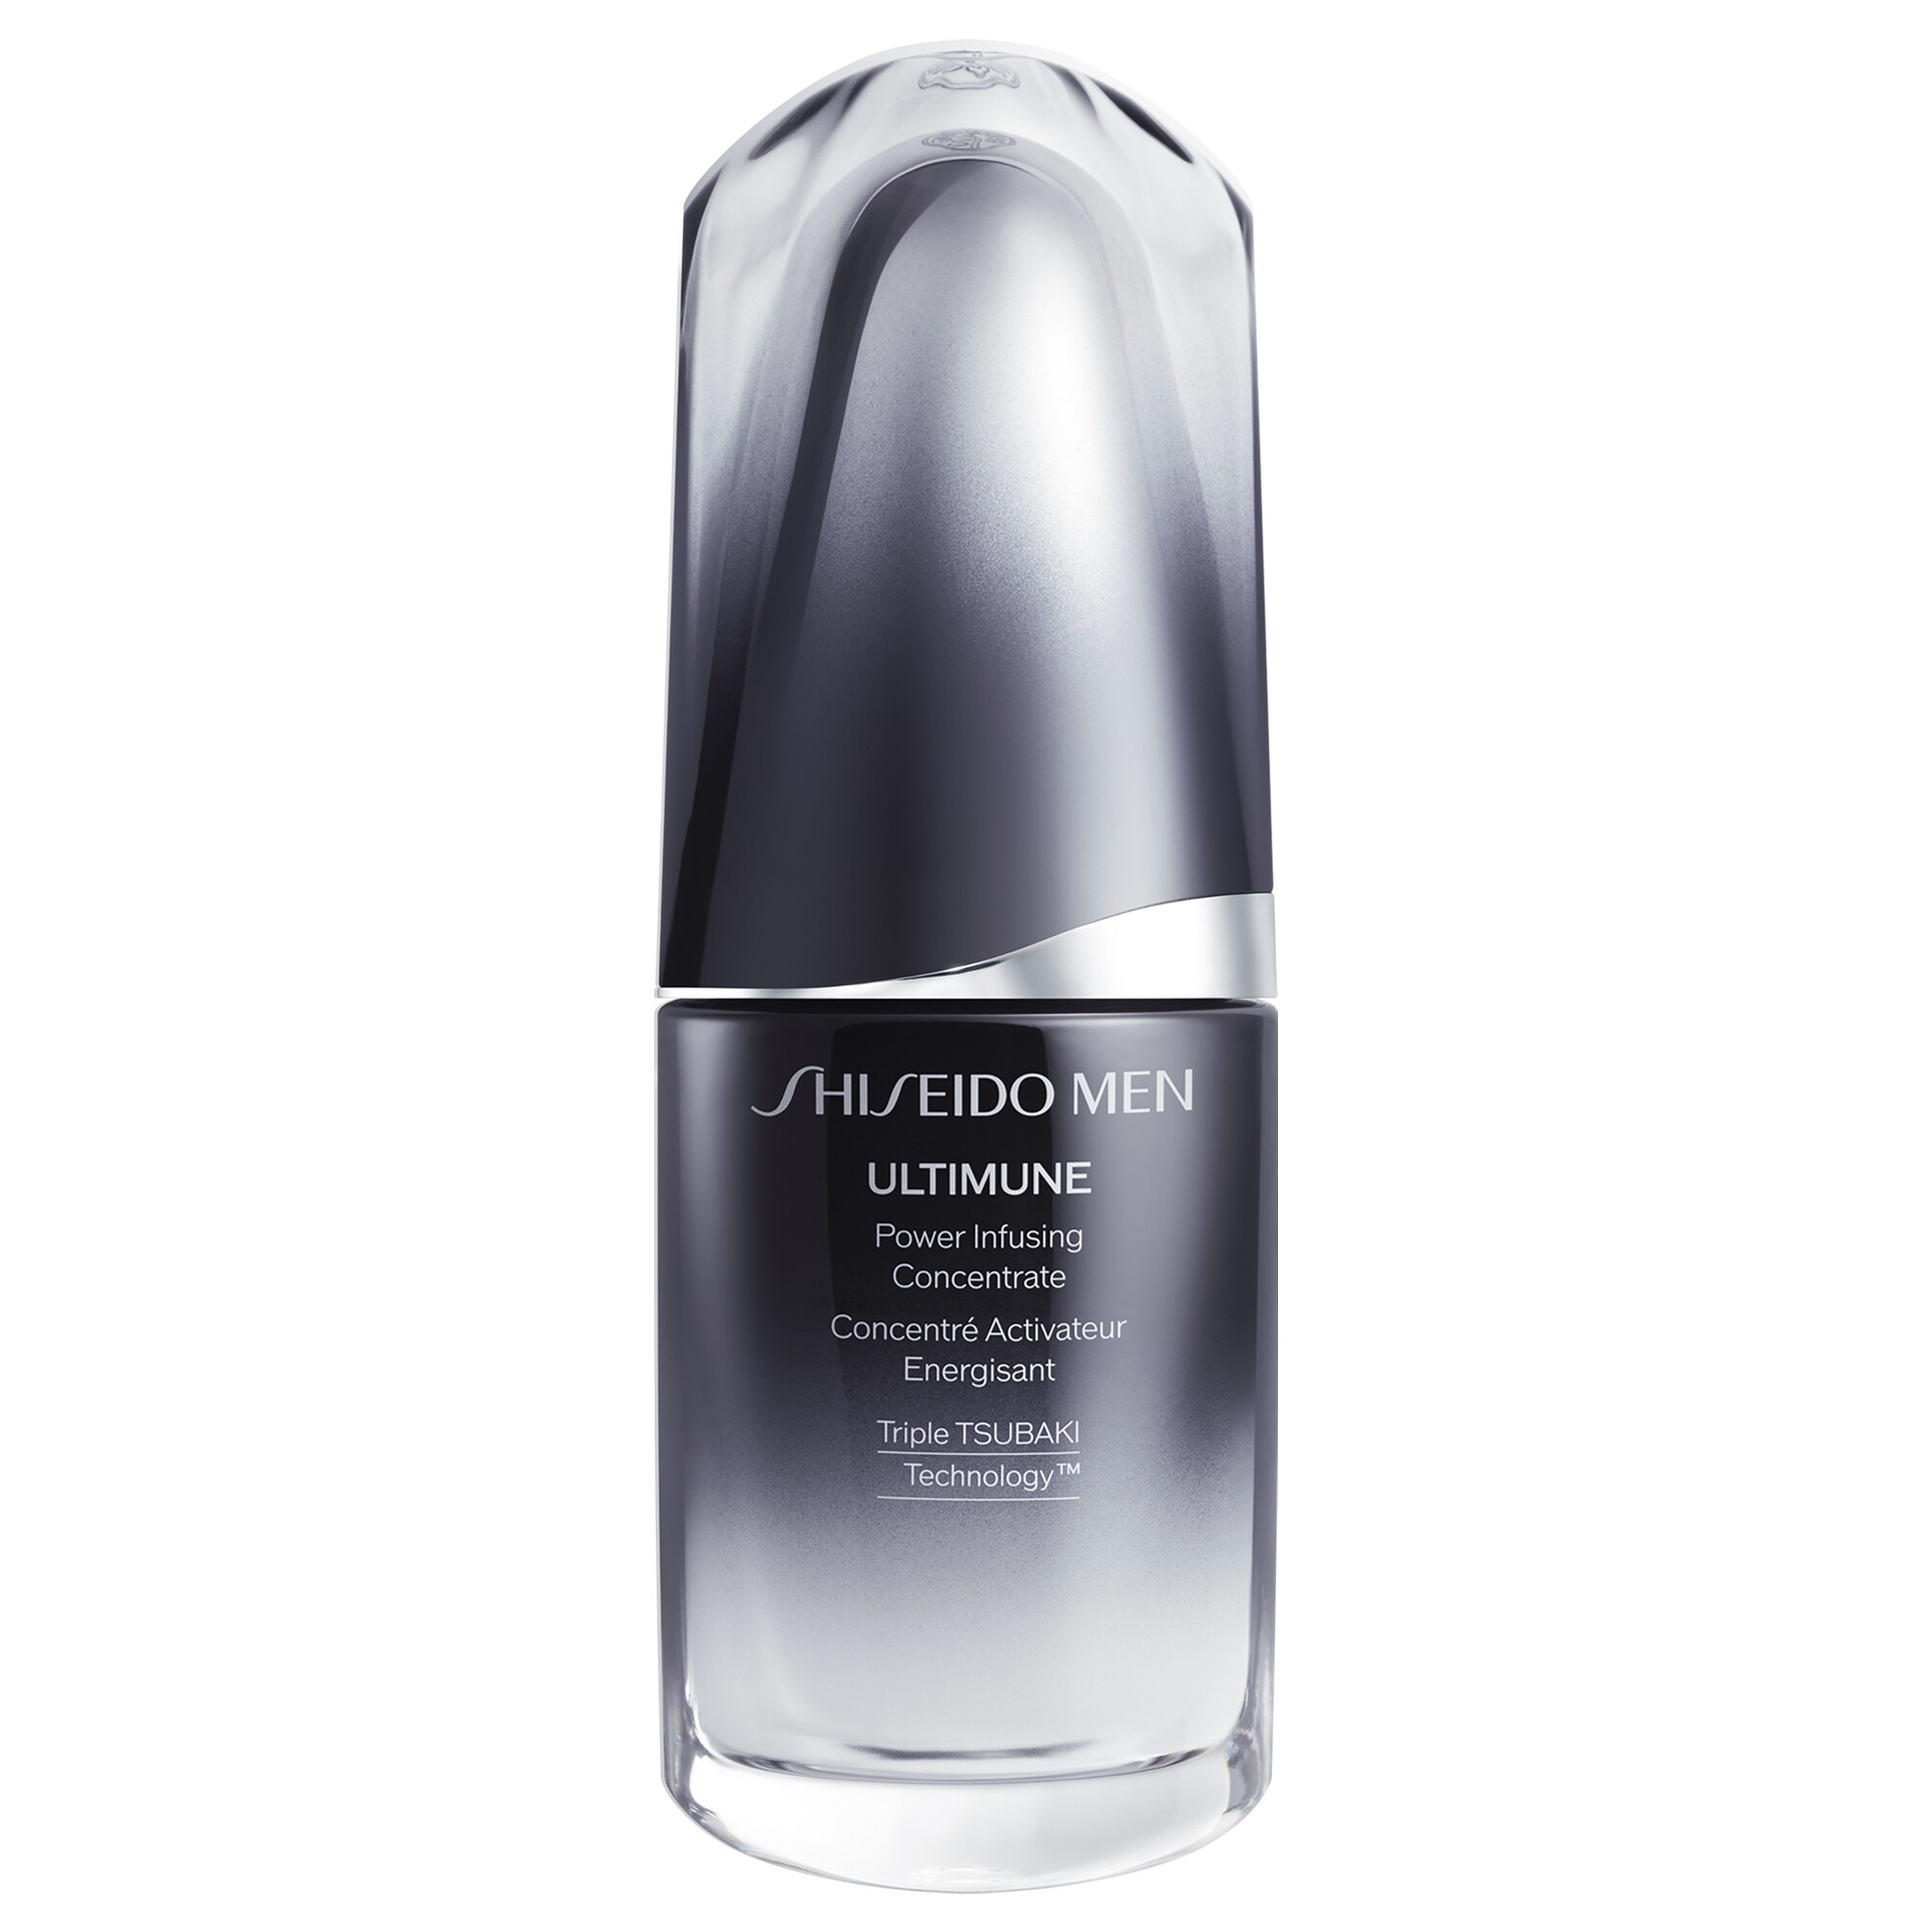 Gesichtspflege Shiseido Men Ultimune Power Infusing Concentrate 30ml bestellen